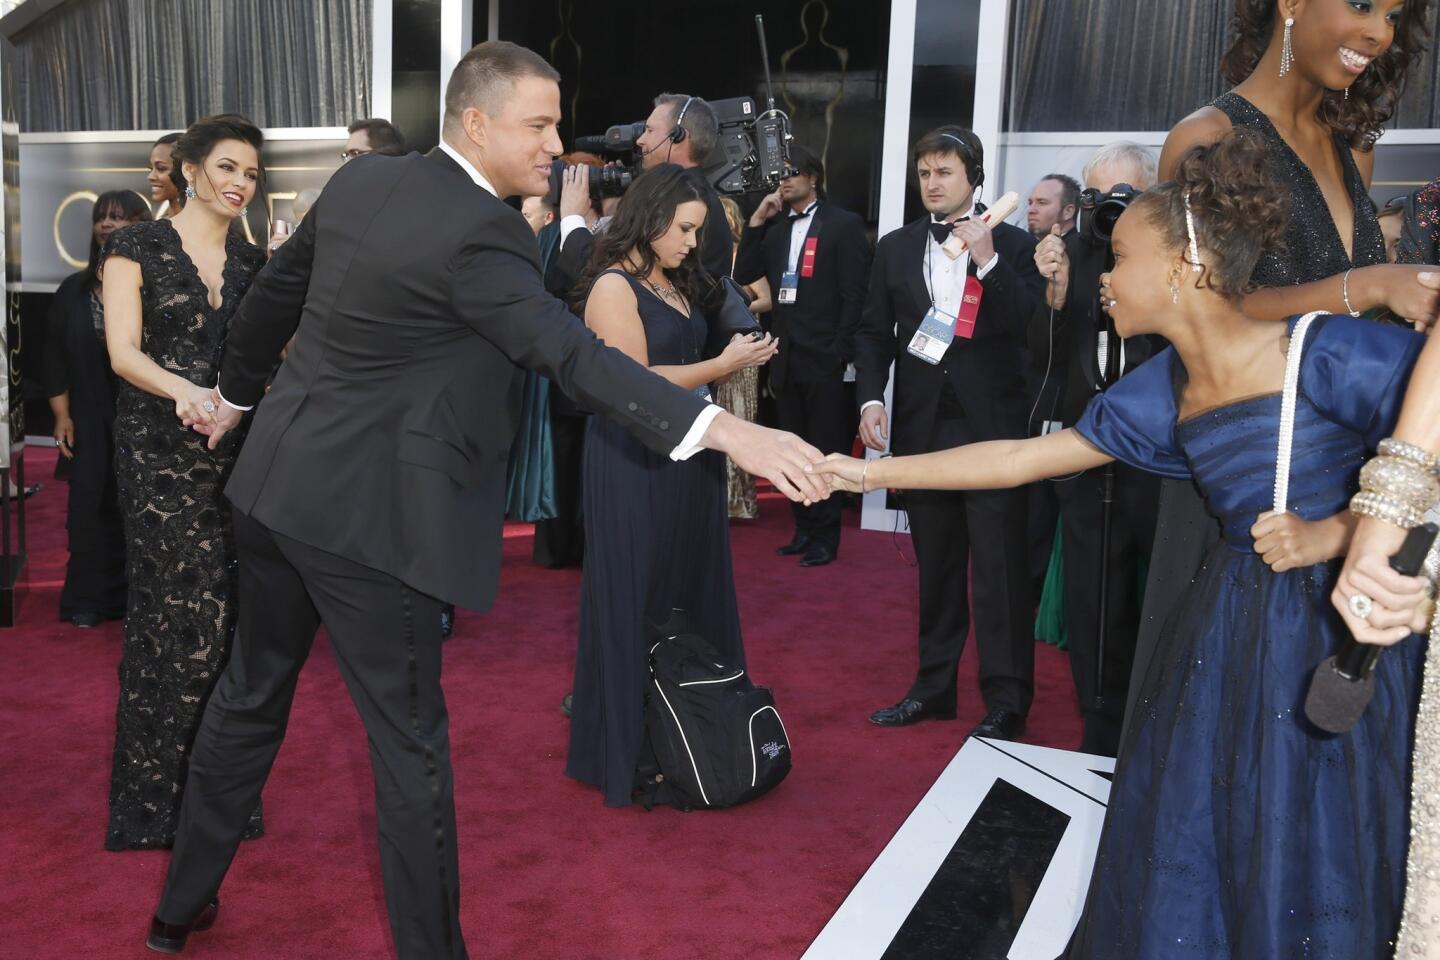 Oscars 2013 arrivals: Channing Tatum and Jenna Dewan